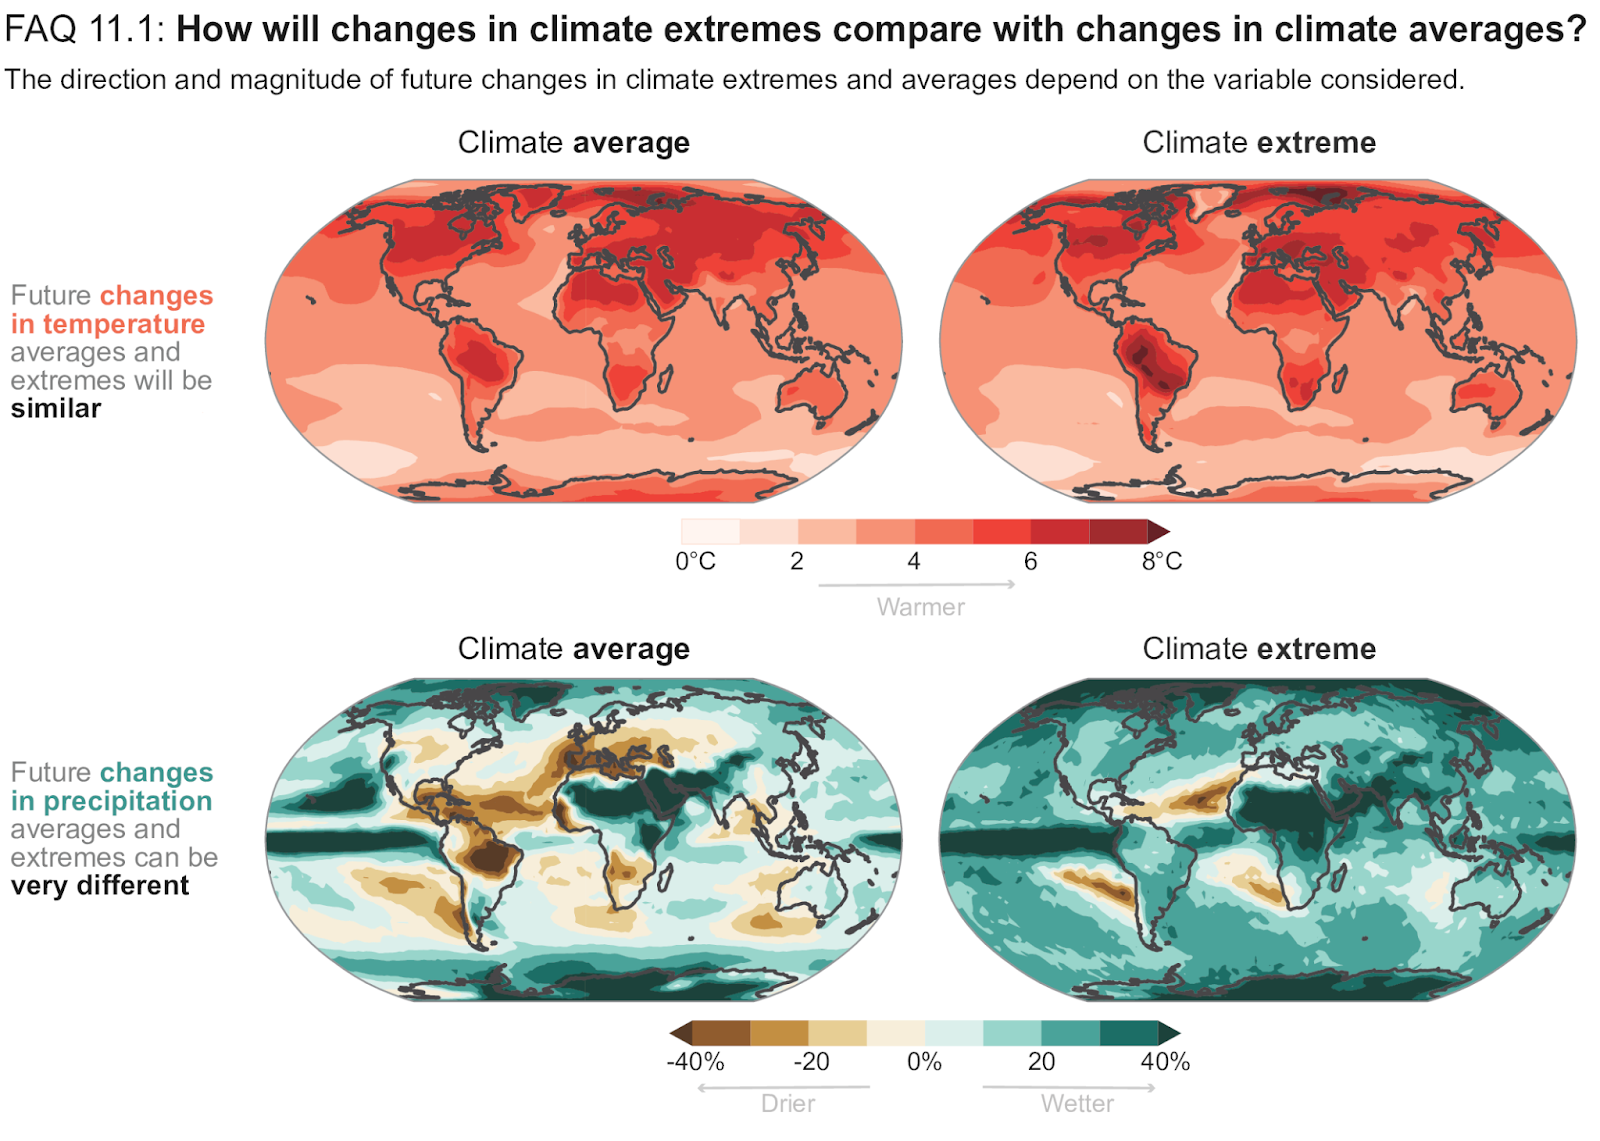 climate averages
Source: IPCC